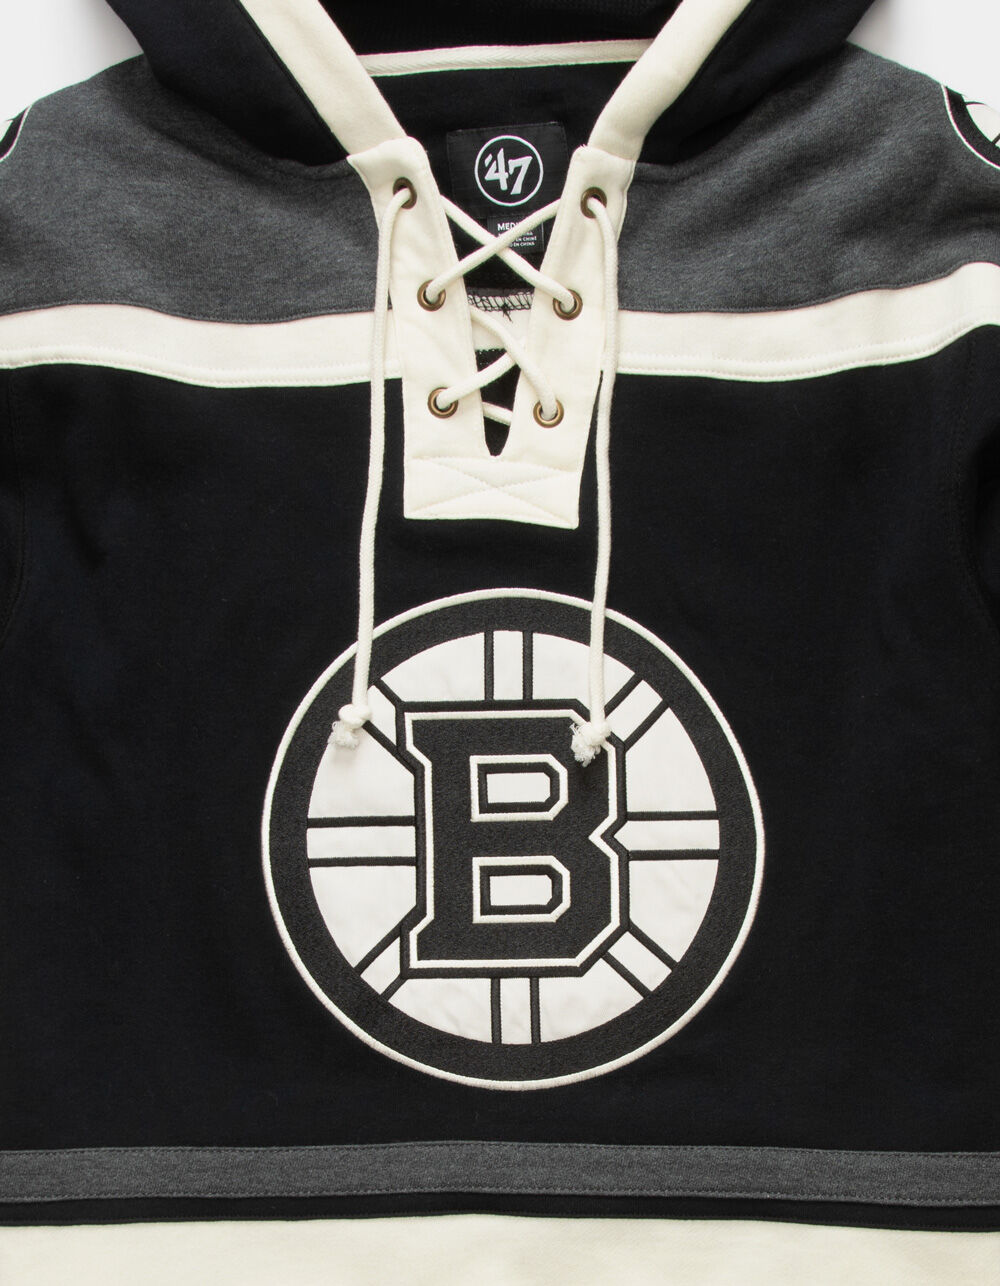 47 Brand NHL Boston Bruins t-shirt in black